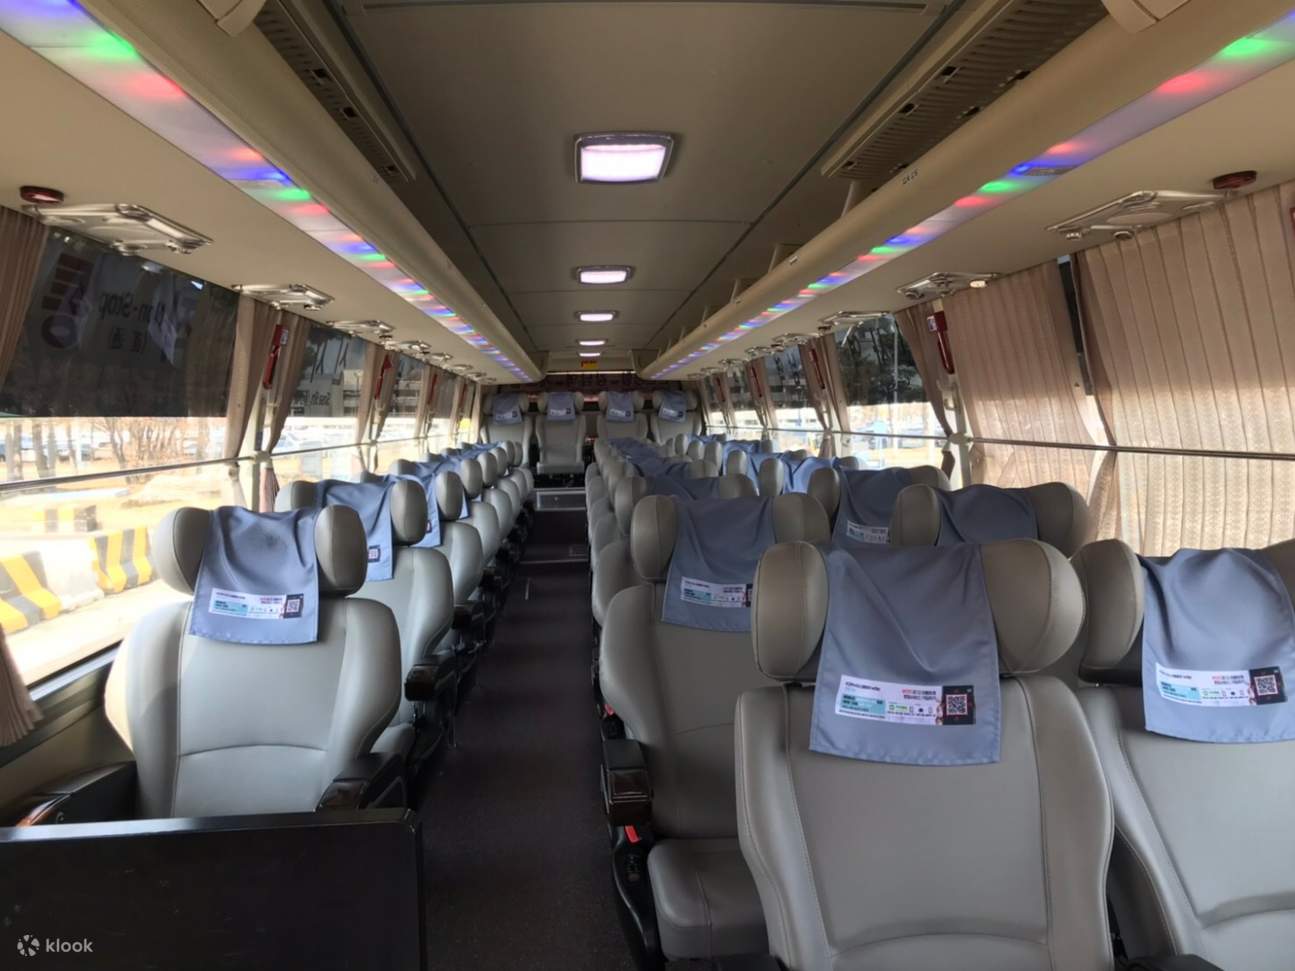 limousine bus interior view